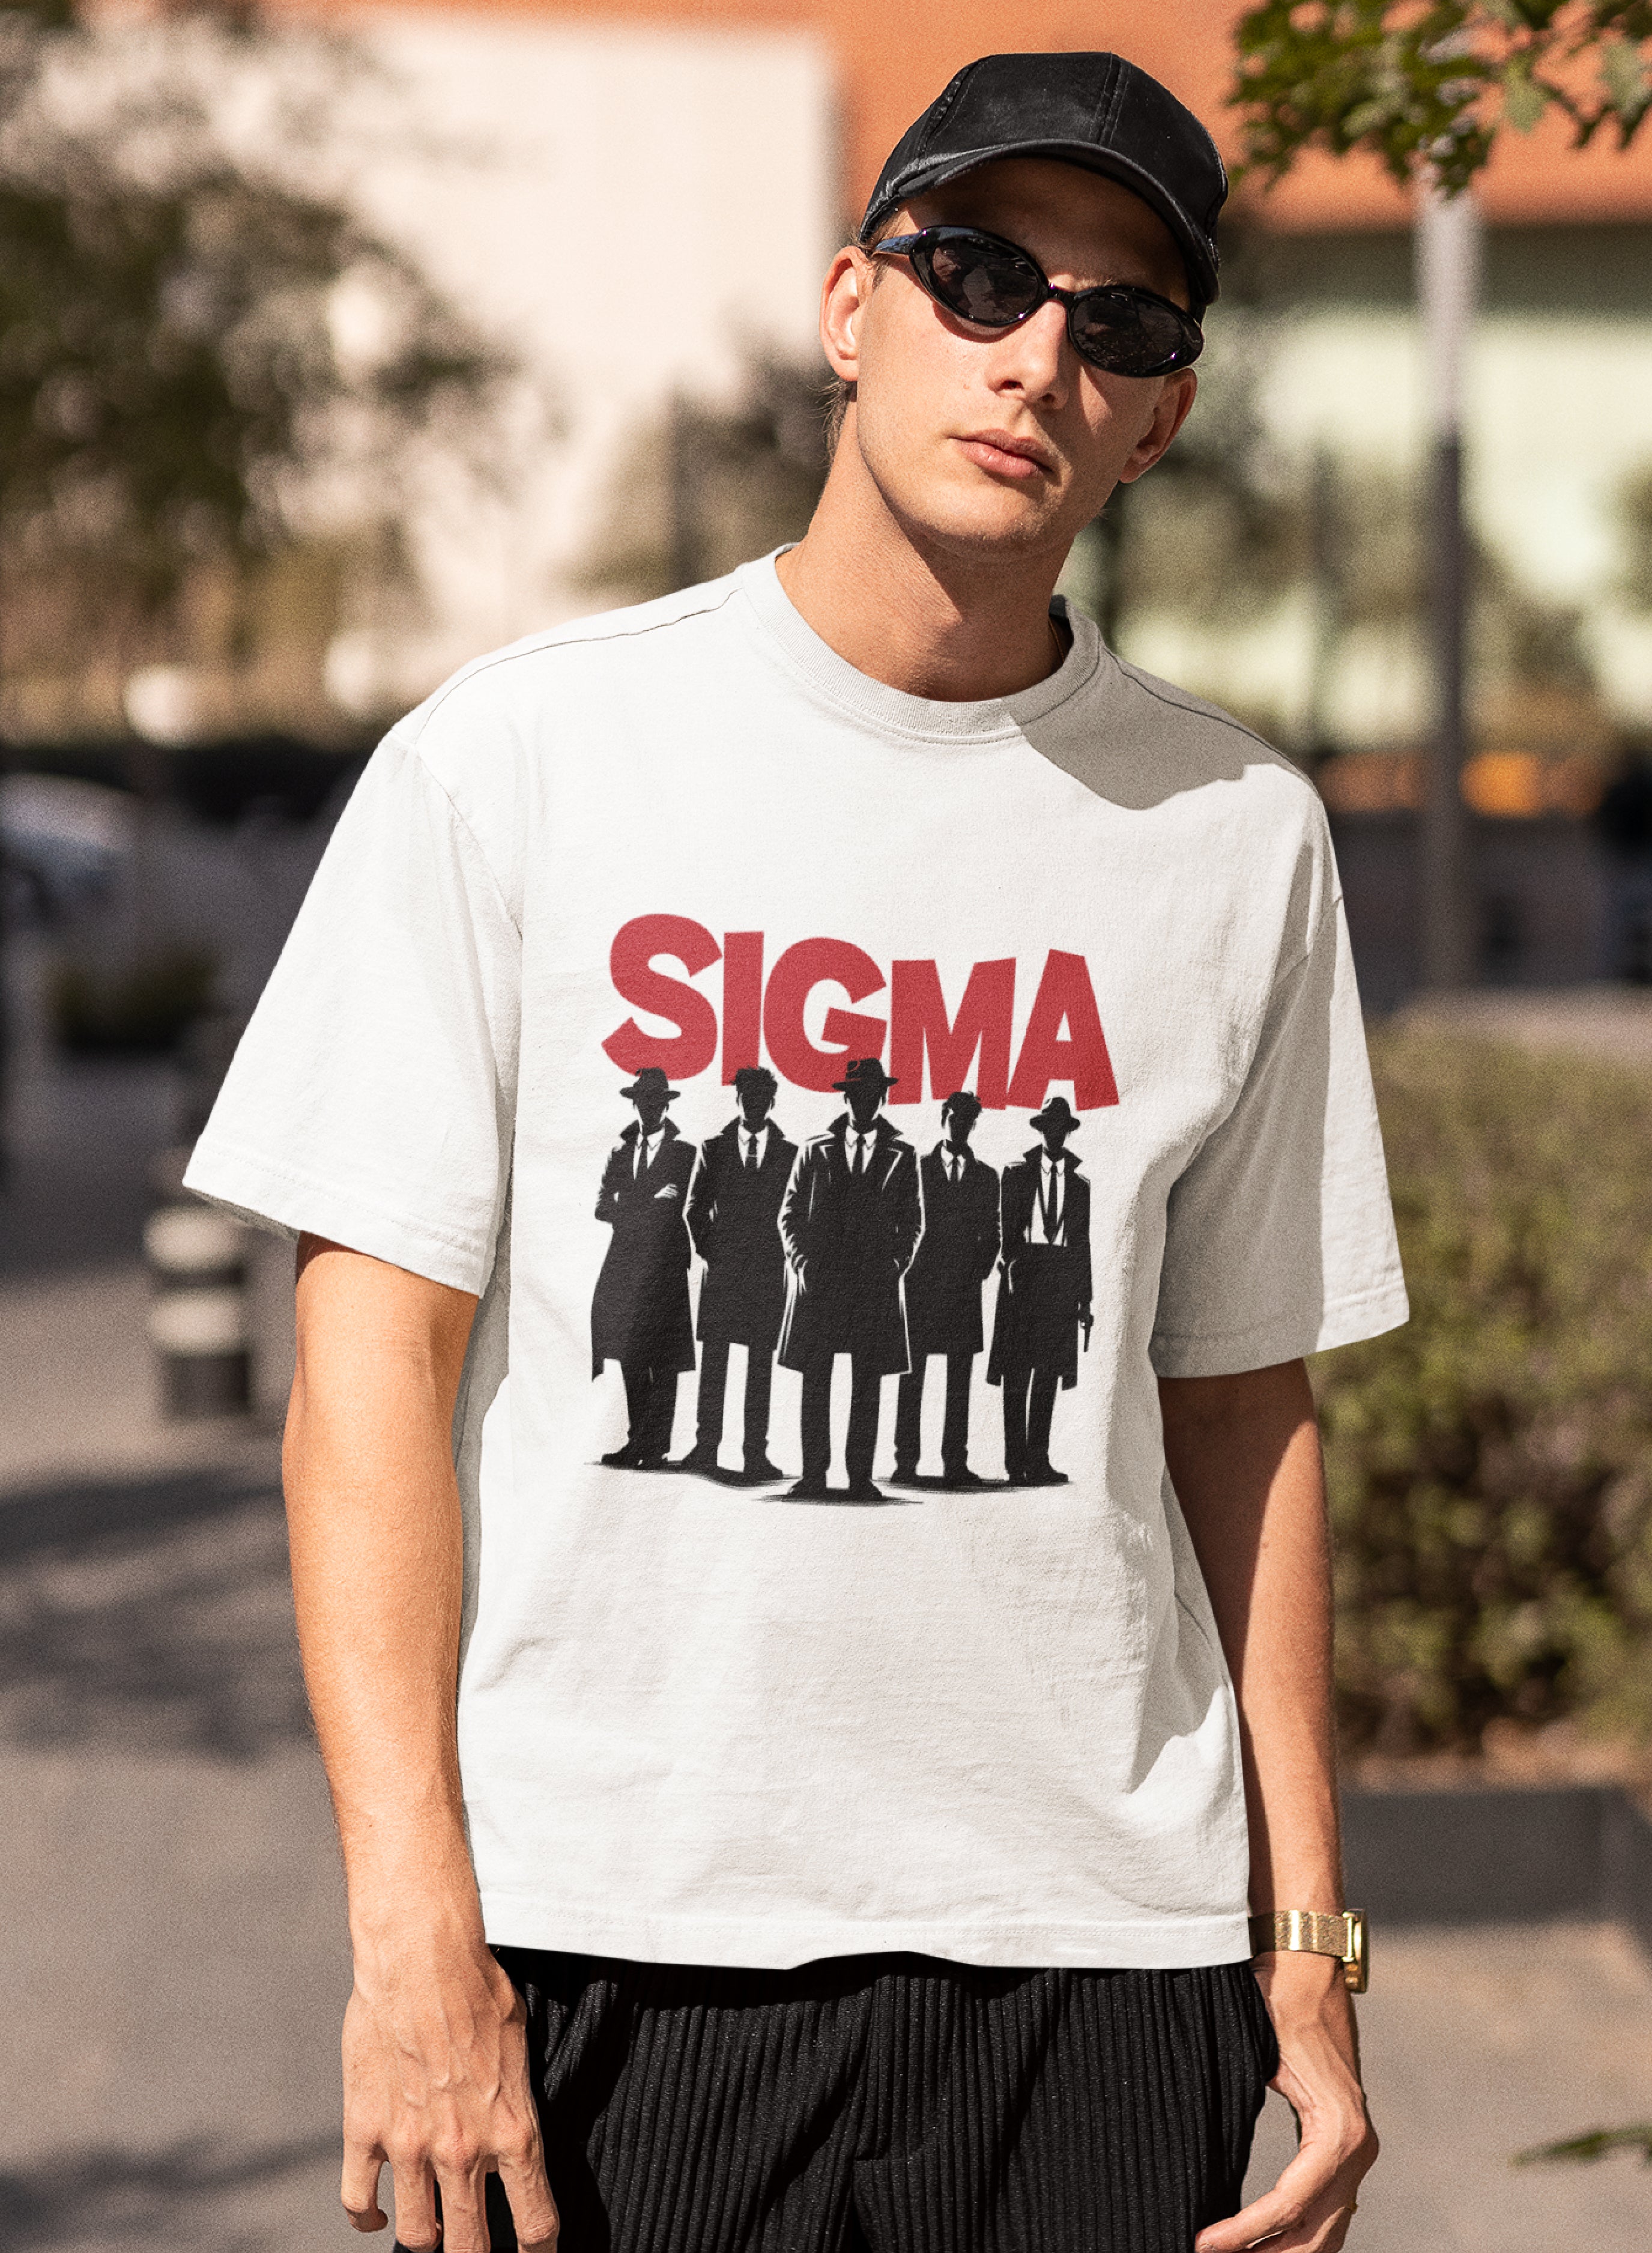 The Sigma